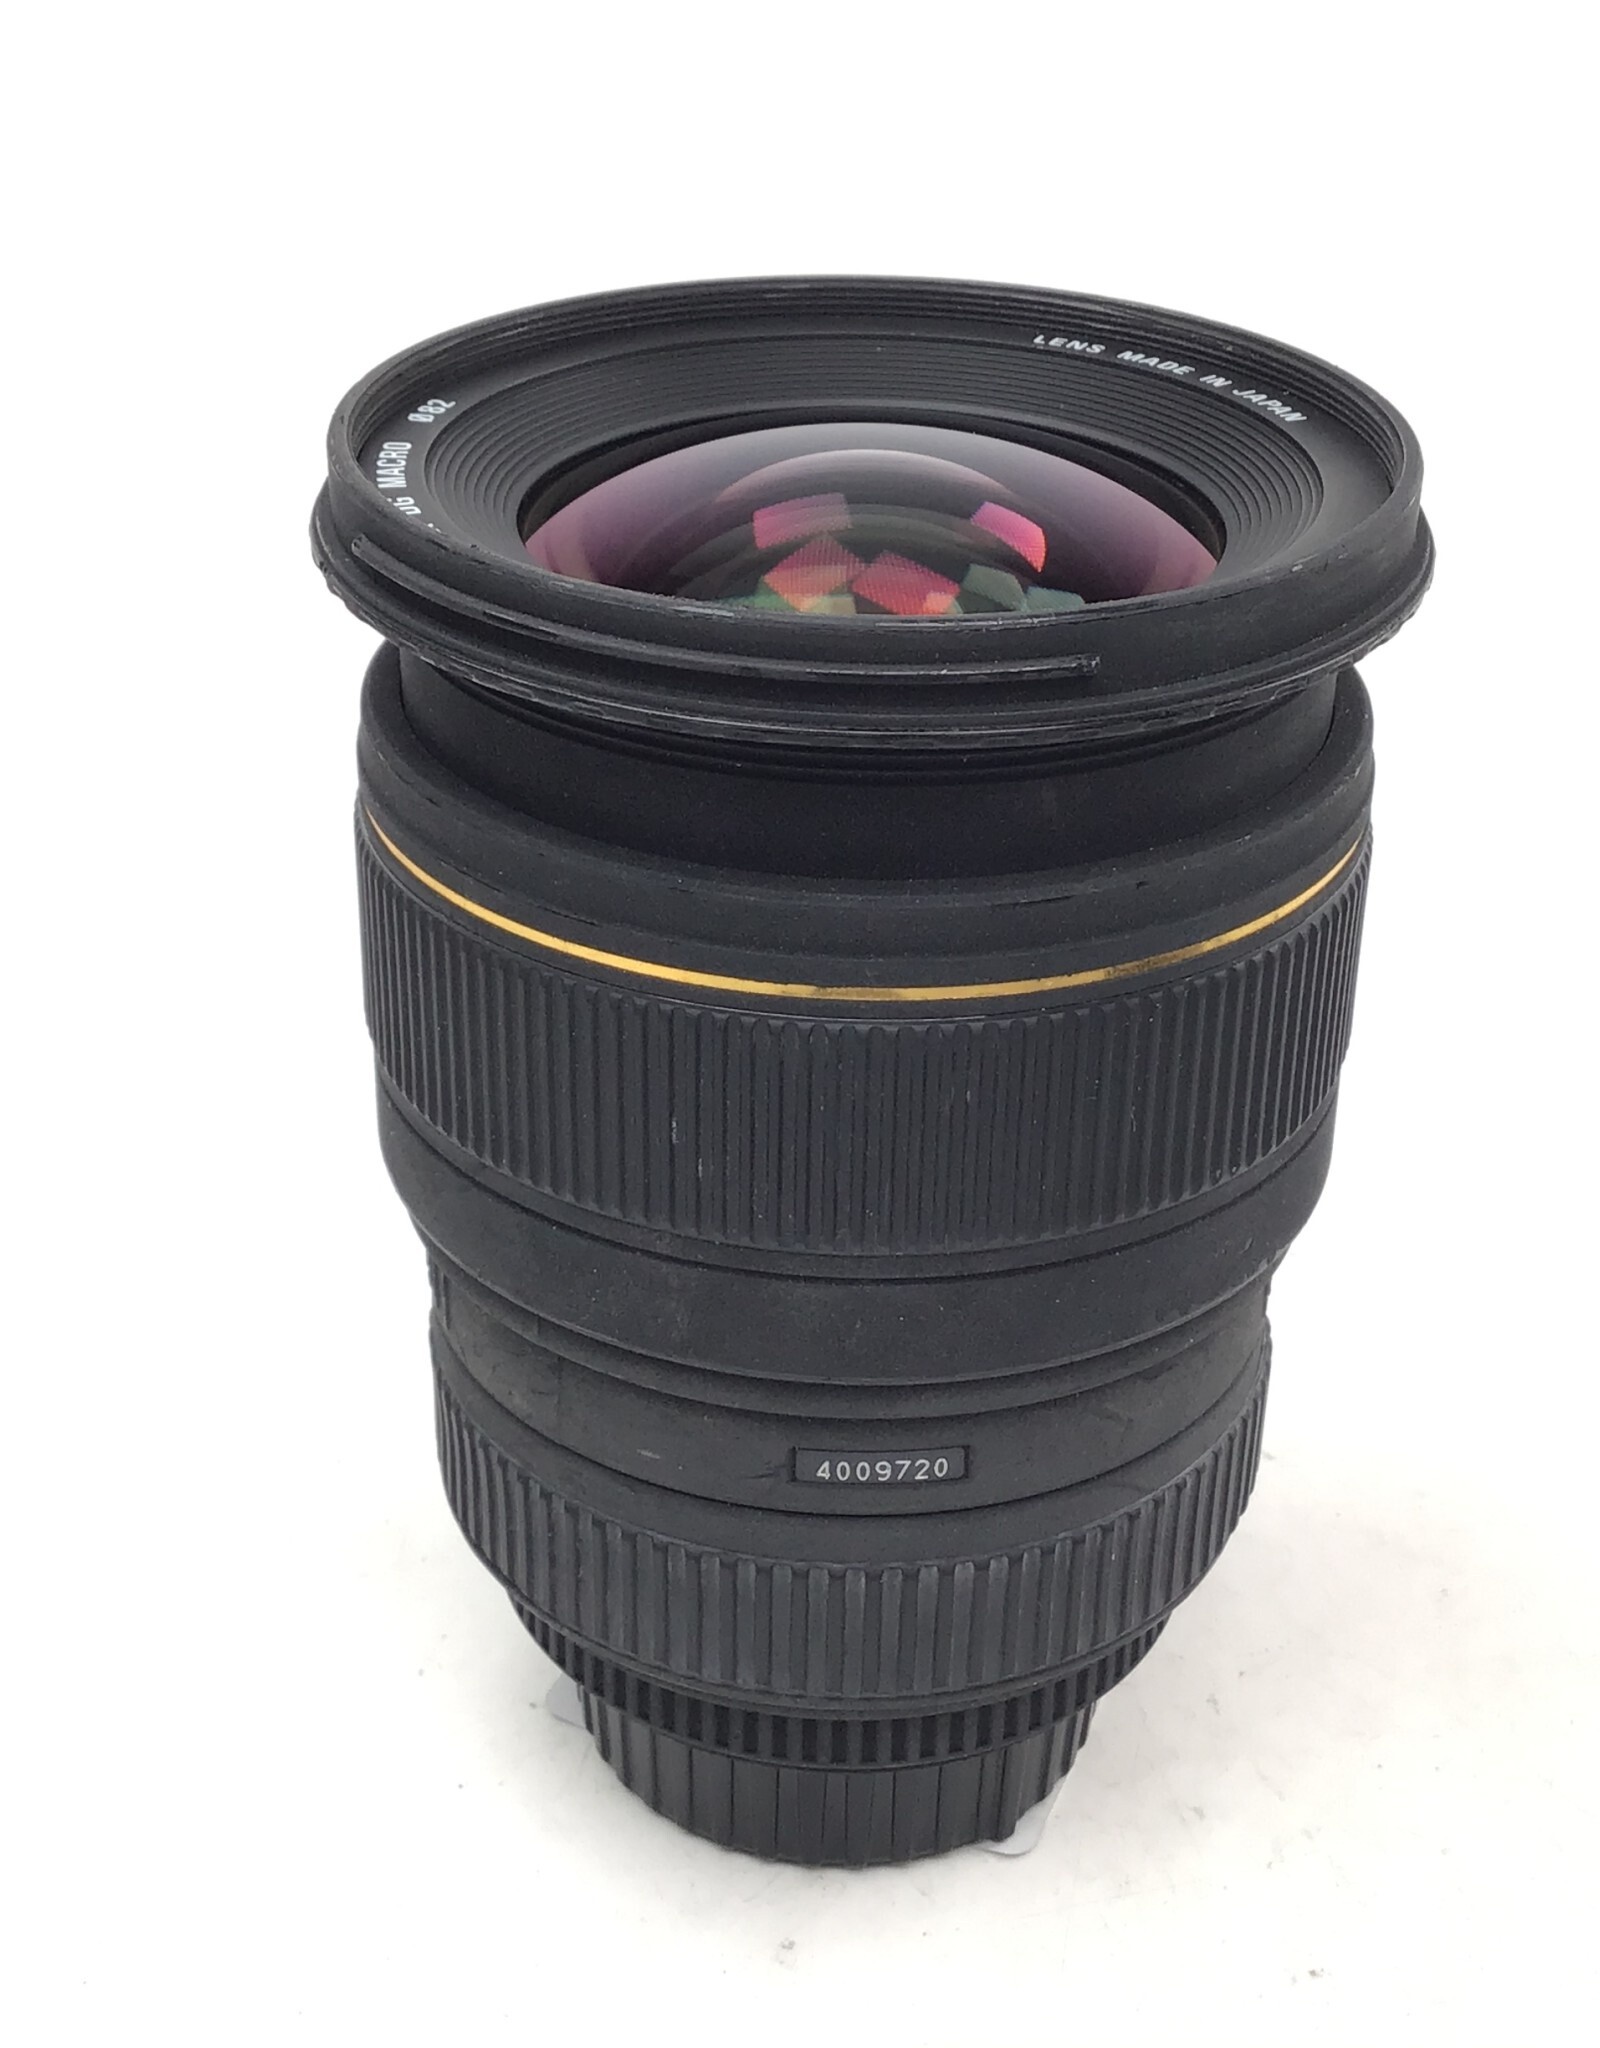 SIGMA Sigma 24-70mm f2.8 EX DG Lens for Nikon Used Fair